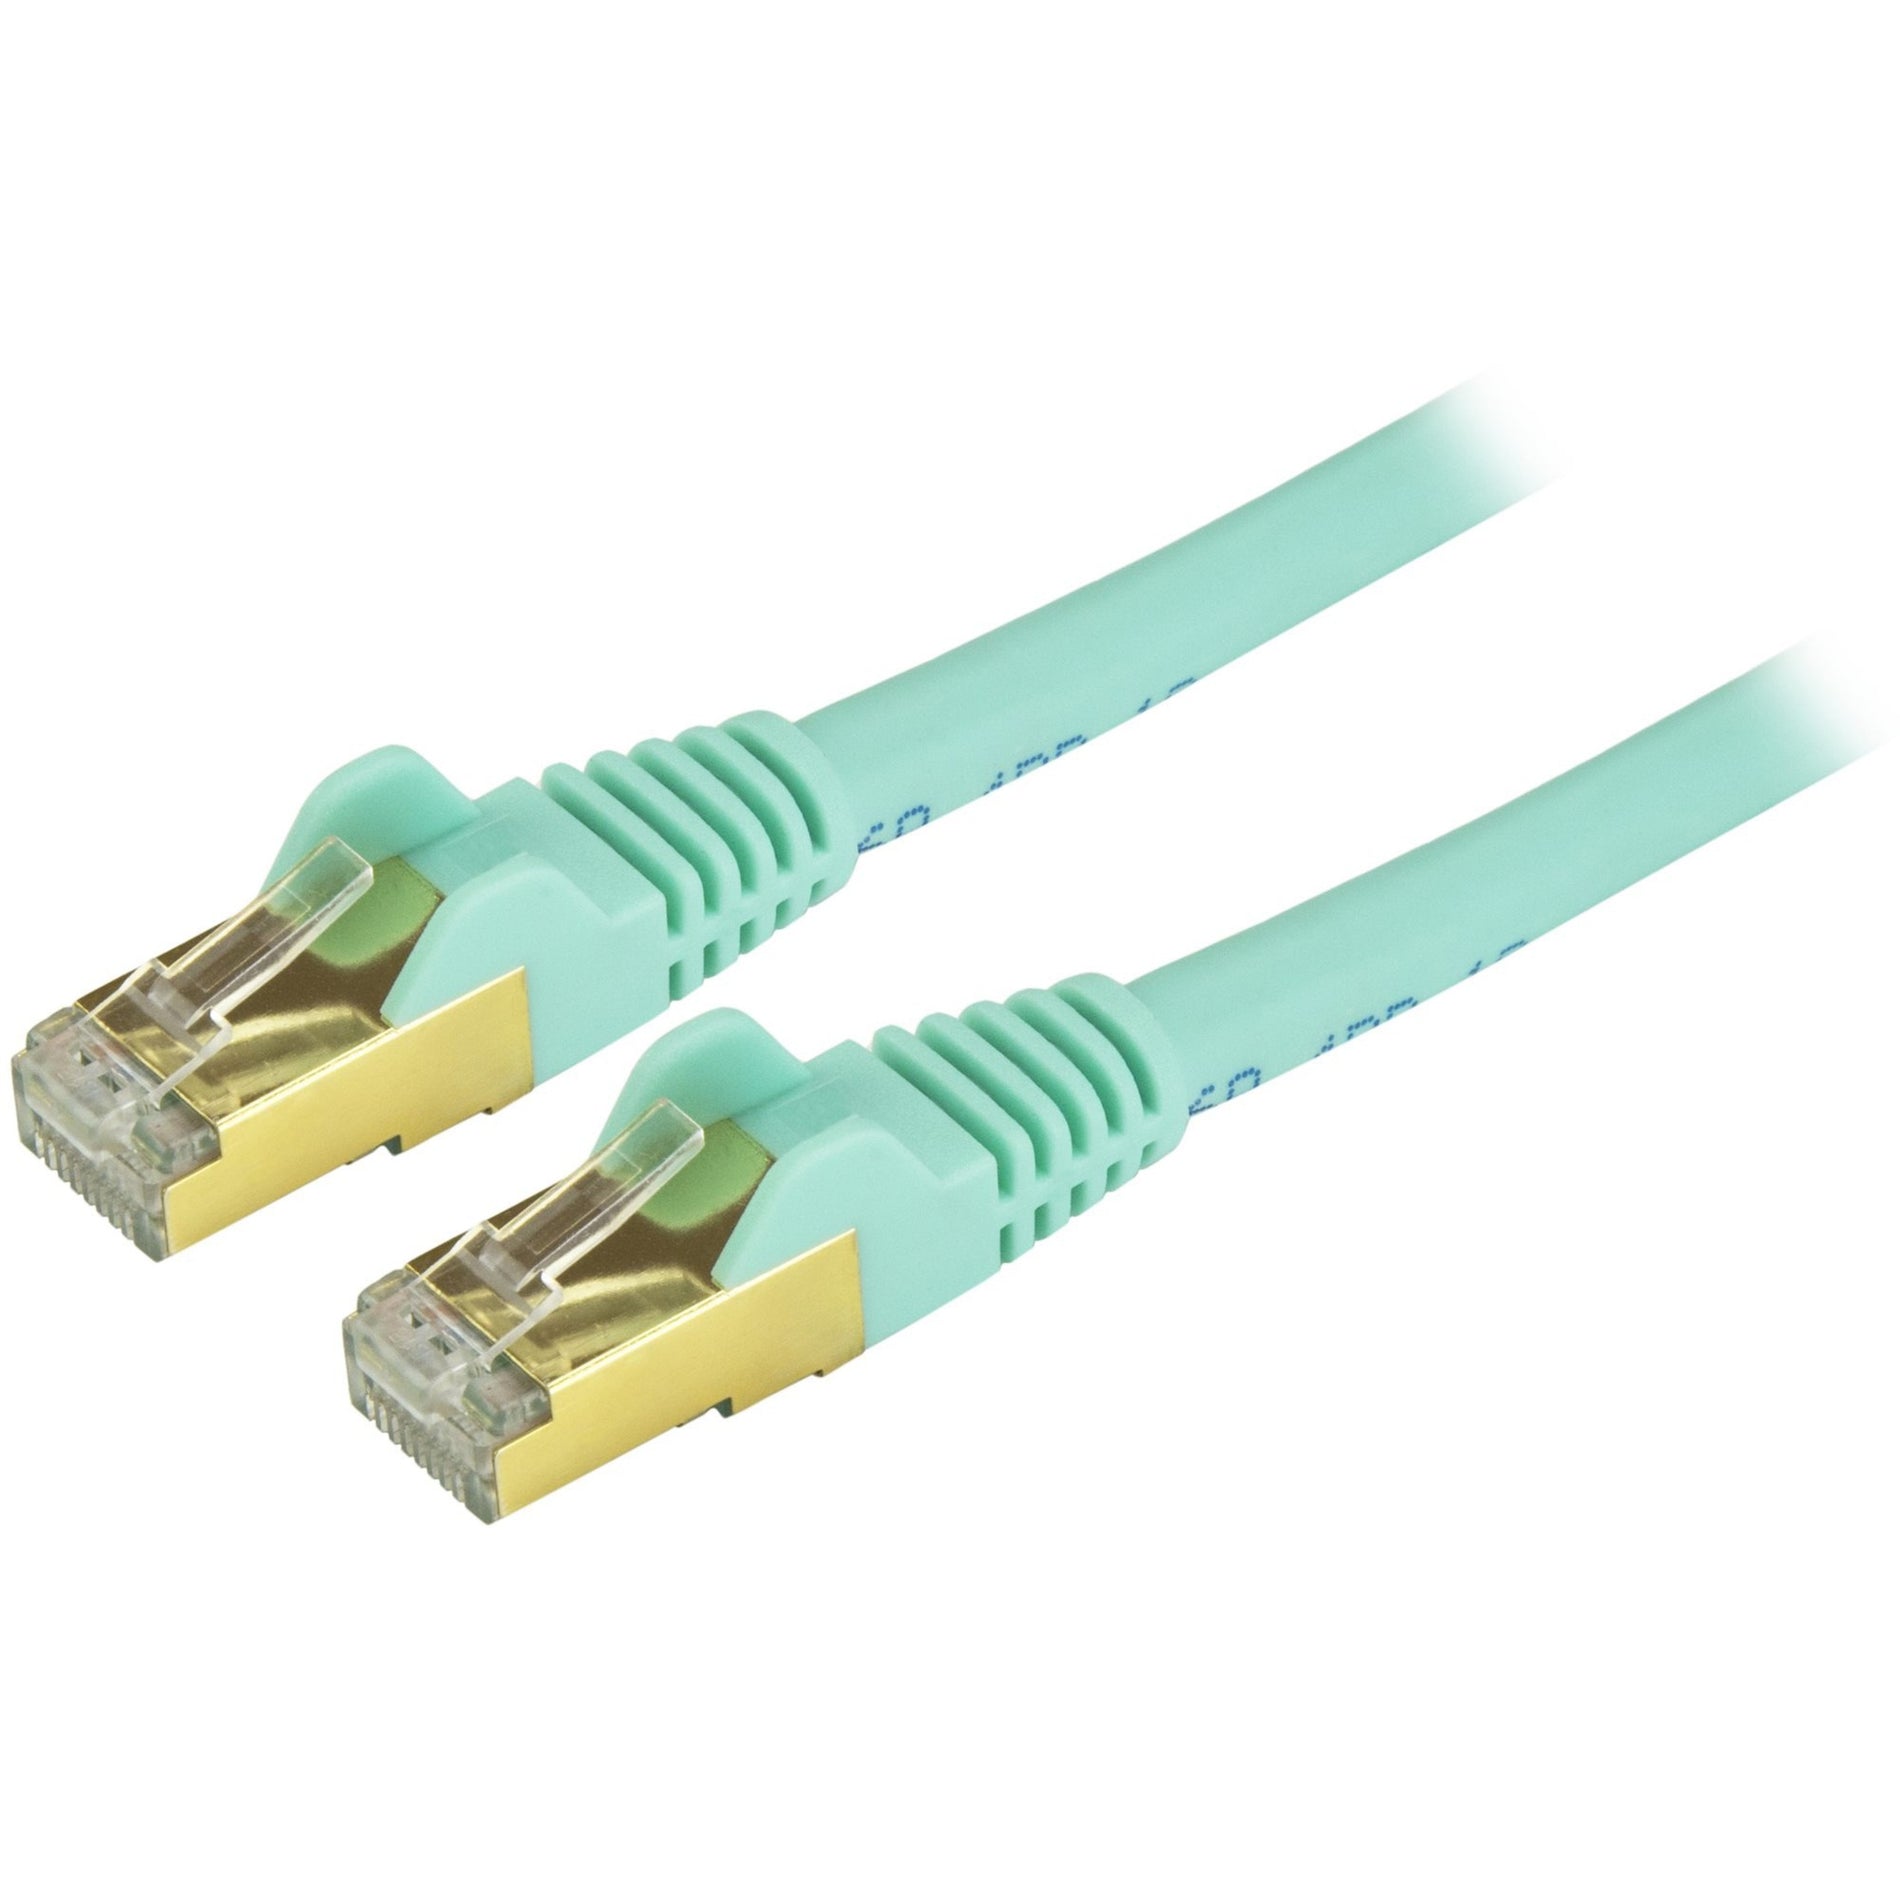 StarTech.com C6ASPAT9AQ Cat6a Ethernet Patch Cable - Shielded (STP) - 9 ft., Aqua, Snagless RJ45 Ethernet Cord